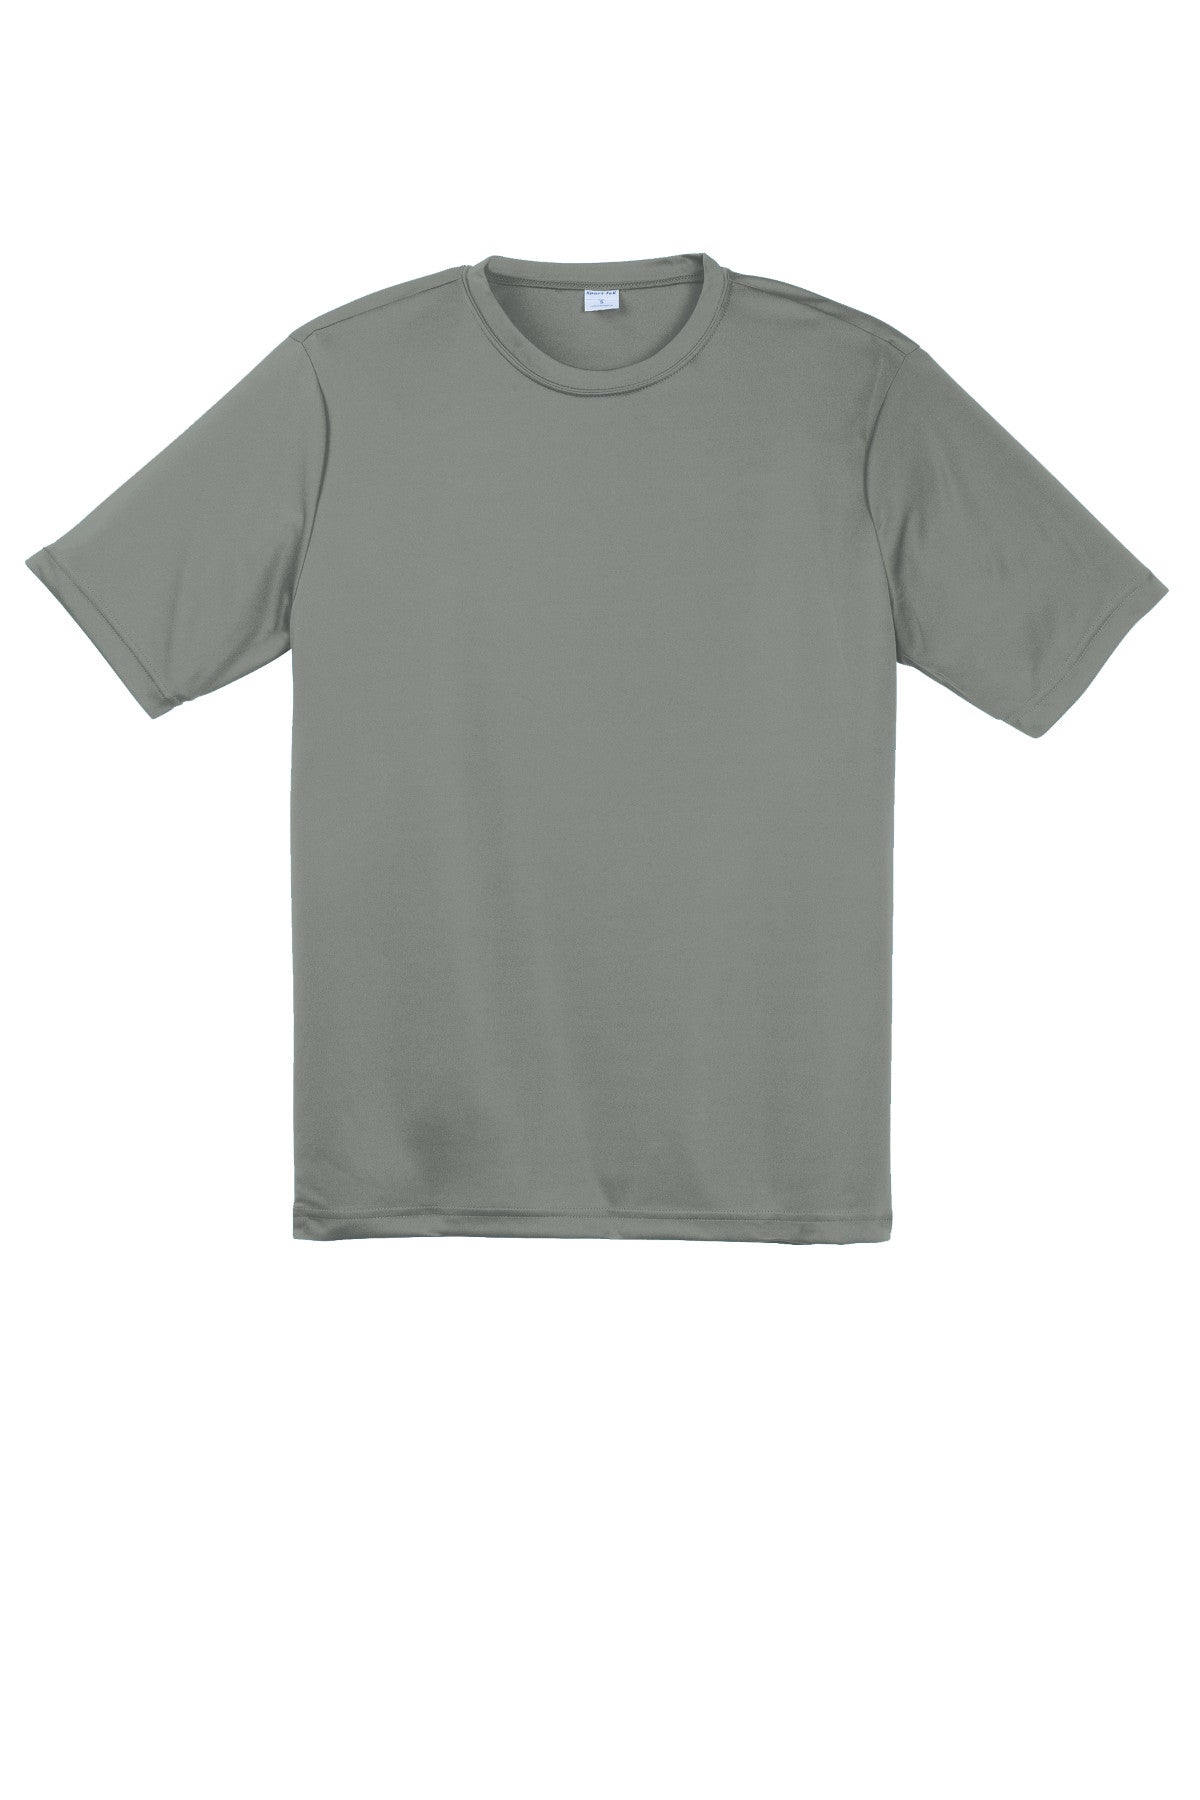 Sport-Tek Yst350 Polyester Youth T-Shirt Yth Small / Gray Concrete